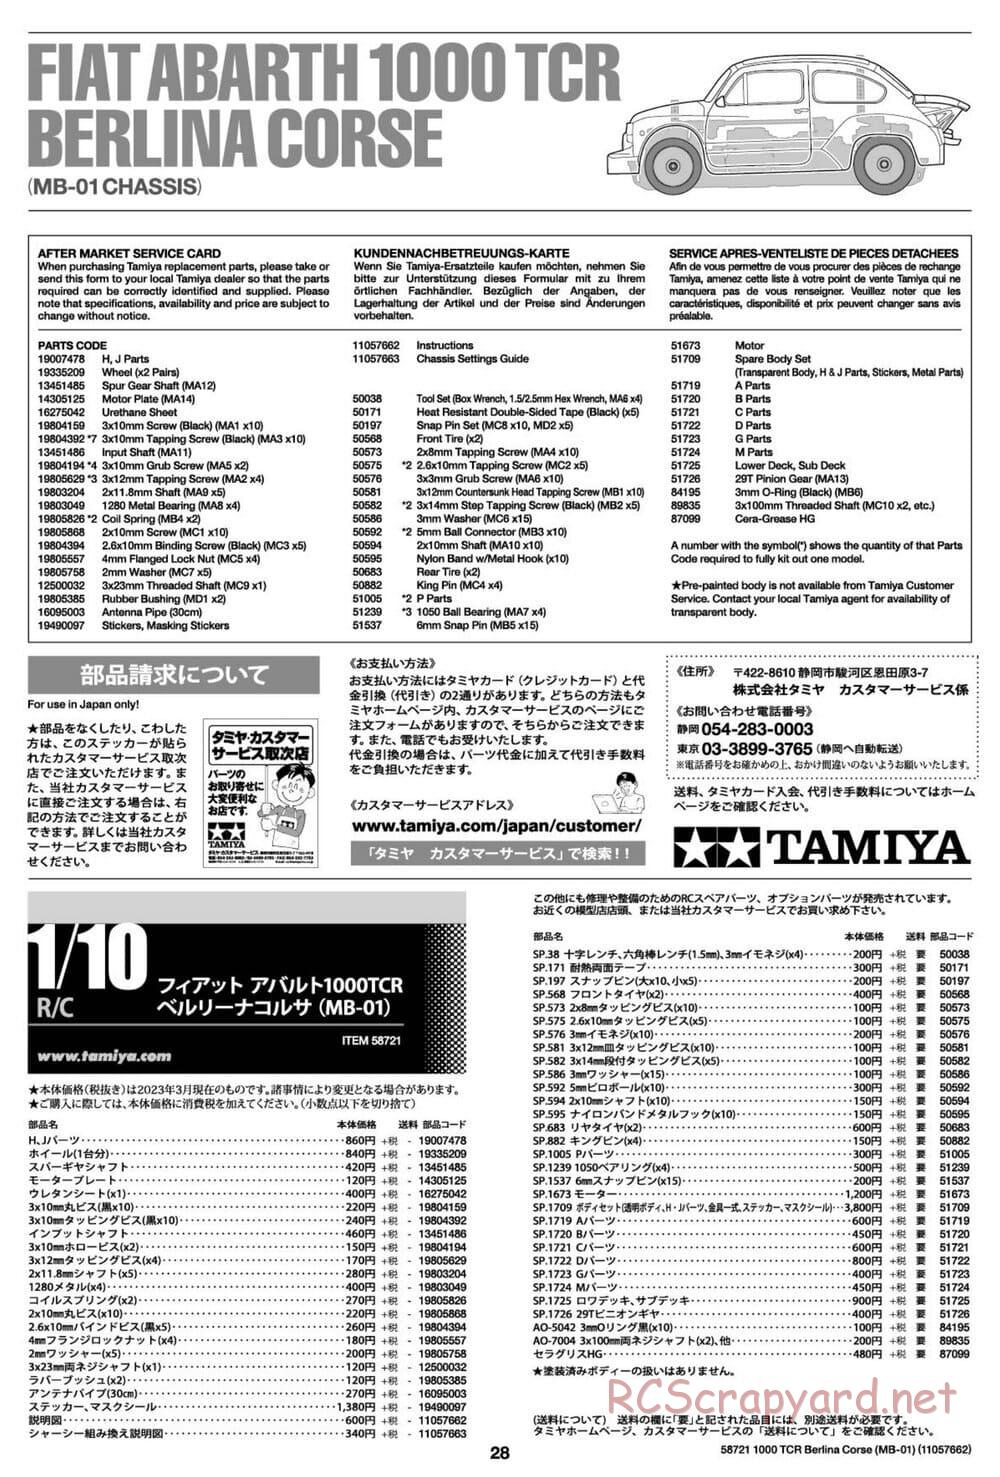 Tamiya - Fiat Abarth 1000 TCR Berlina Corsa - MB-01 Chassis - Manual - Page 28